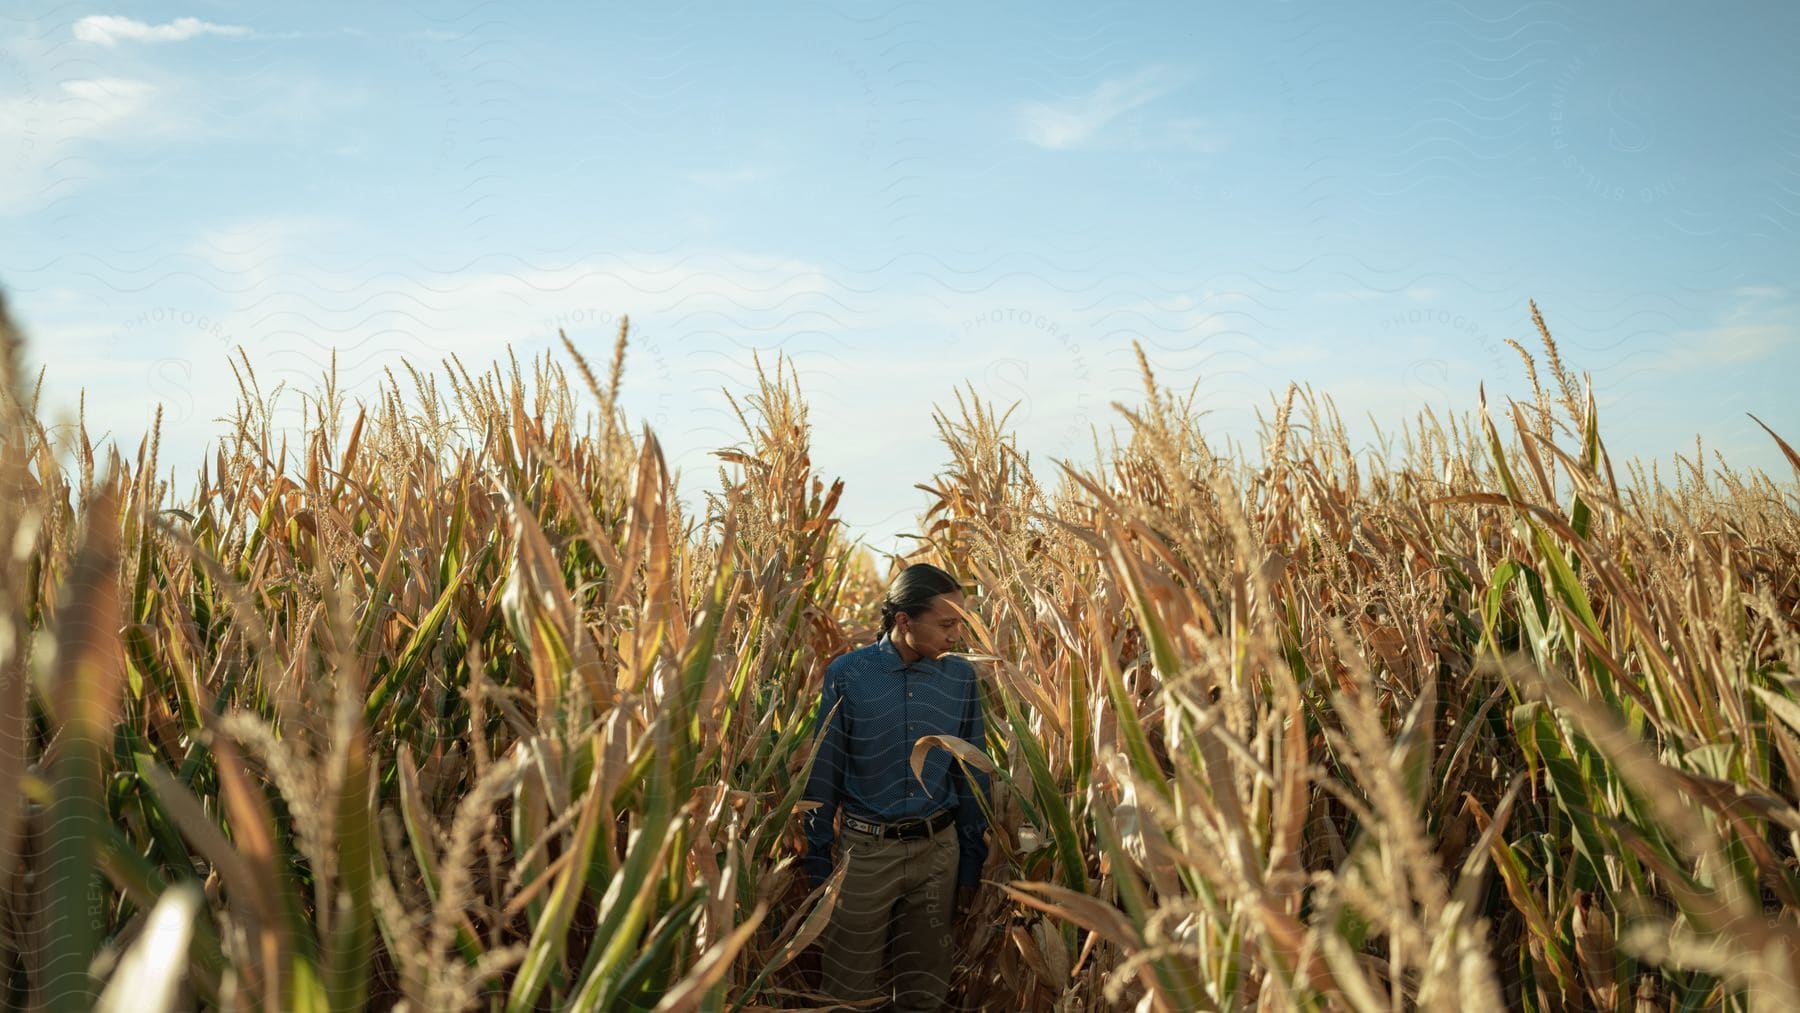 A man walks through a tasseled corn field